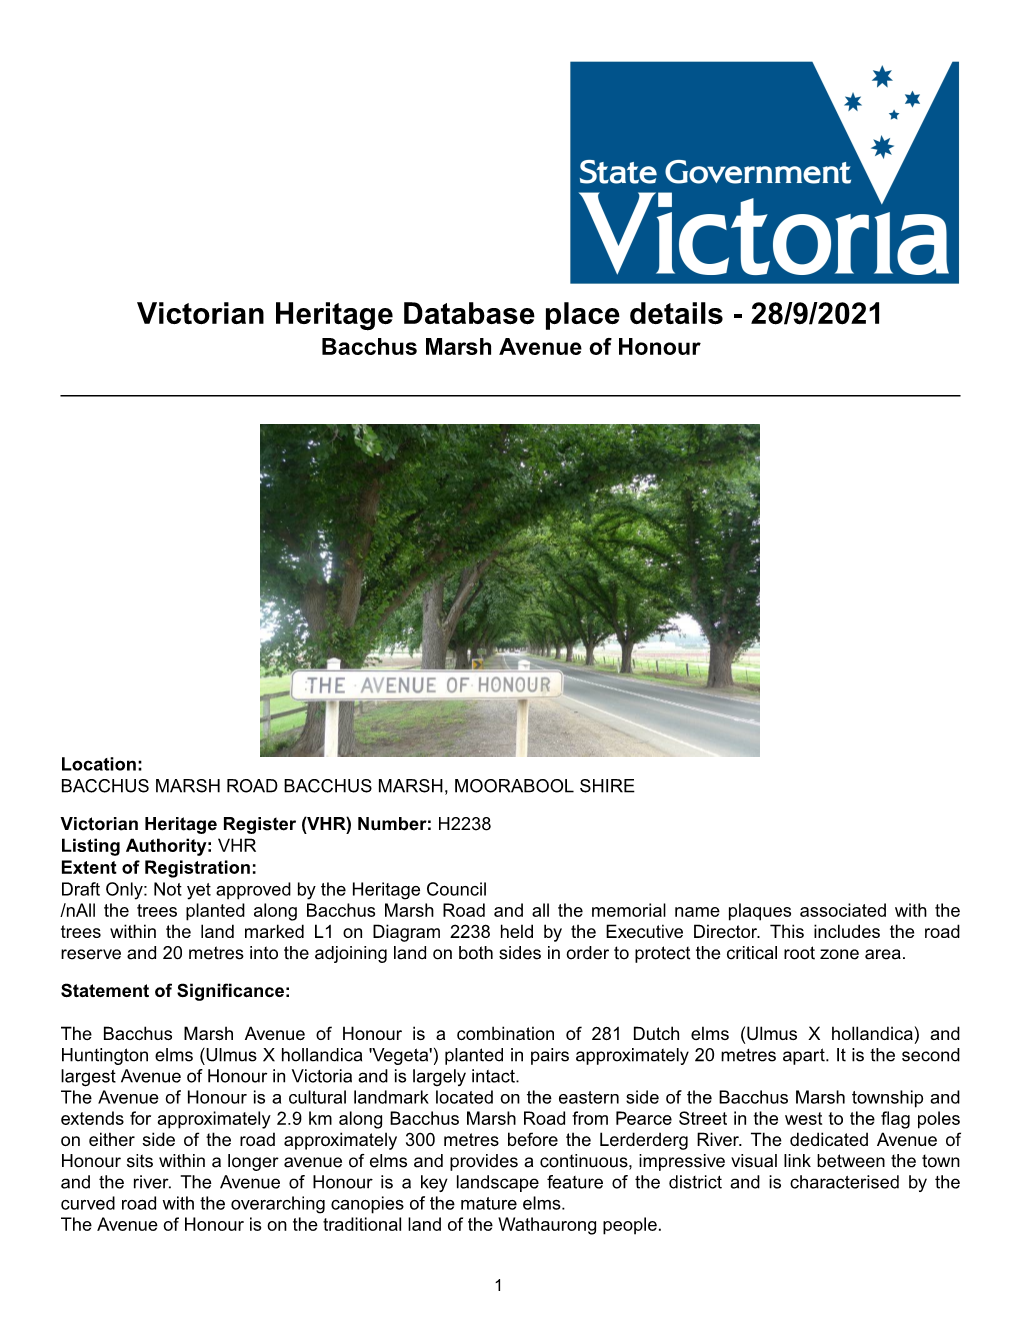 Victorian Heritage Database Place Details - 28/9/2021 Bacchus Marsh Avenue of Honour